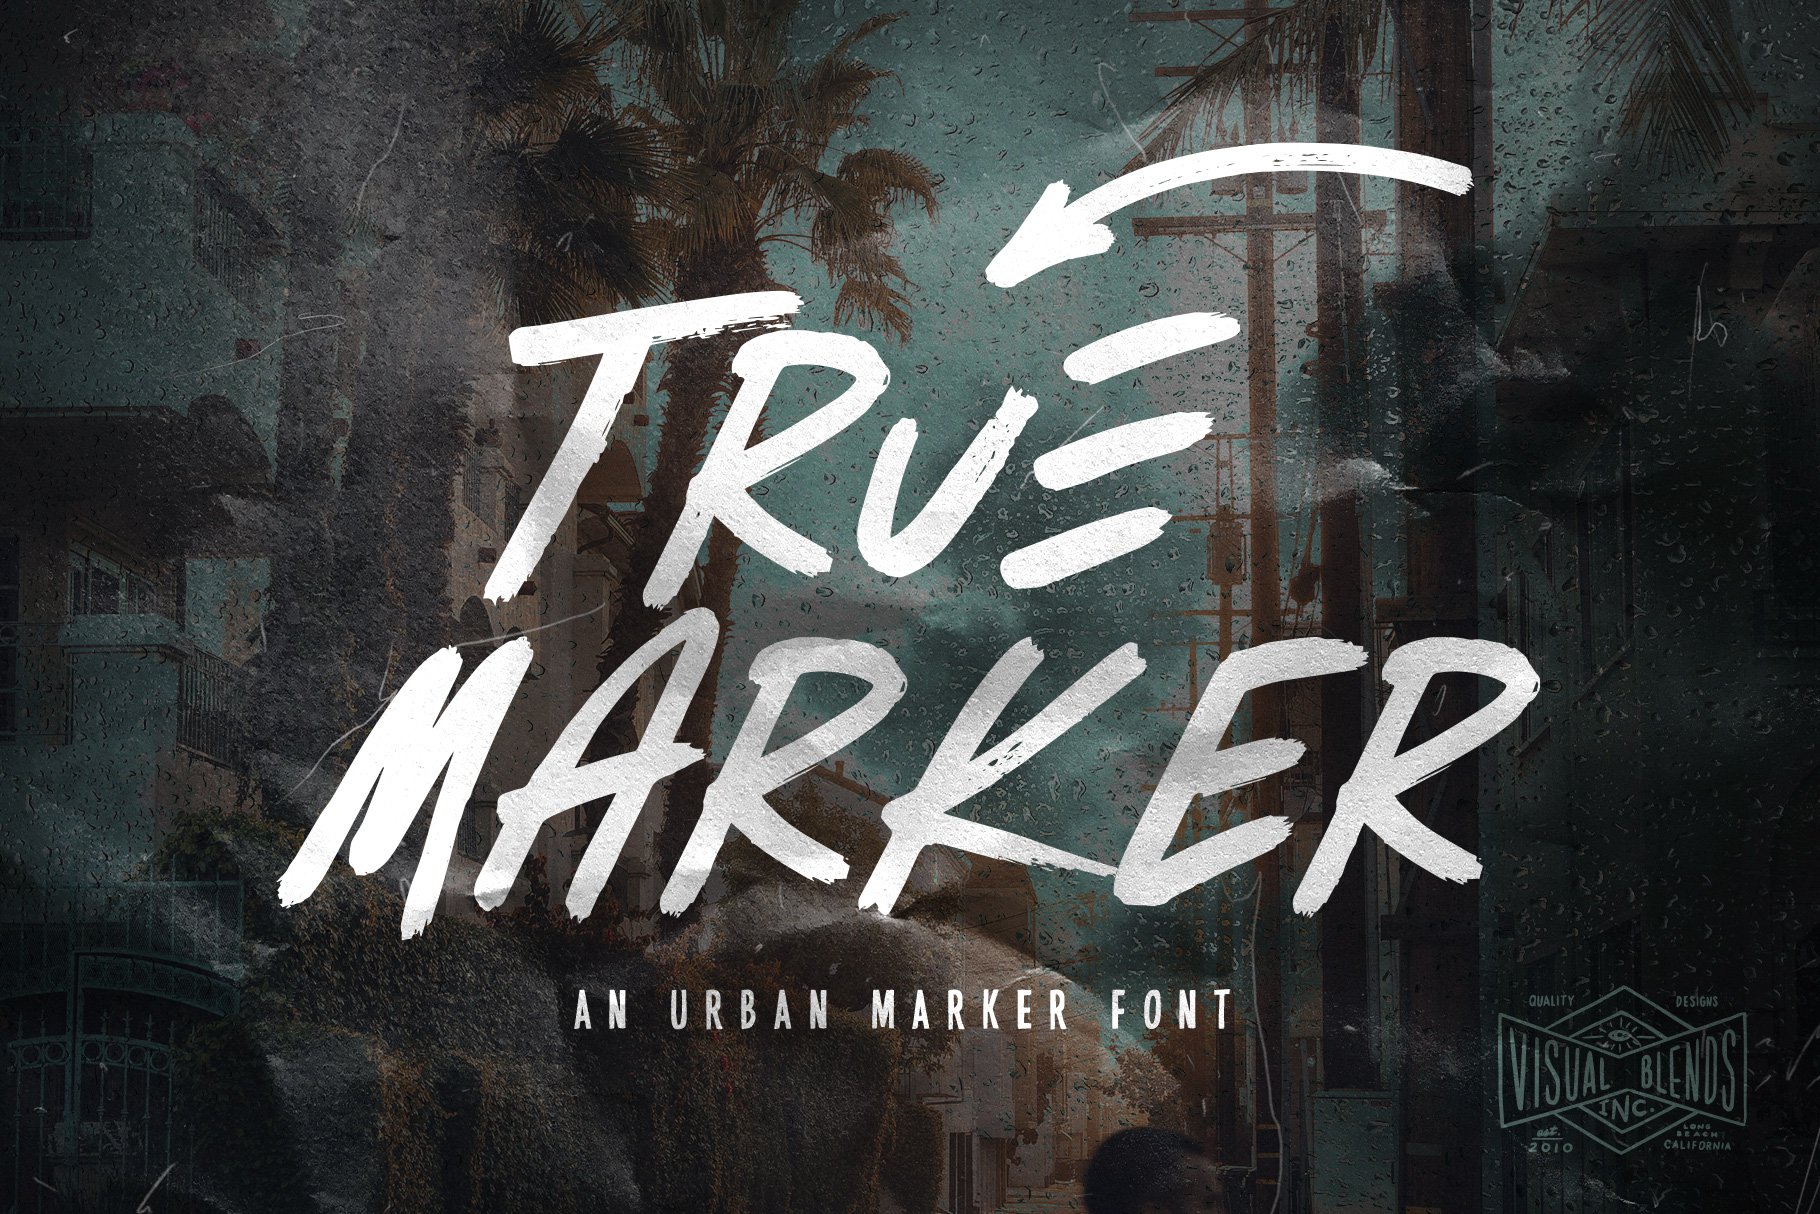 True Marker Font cover image.